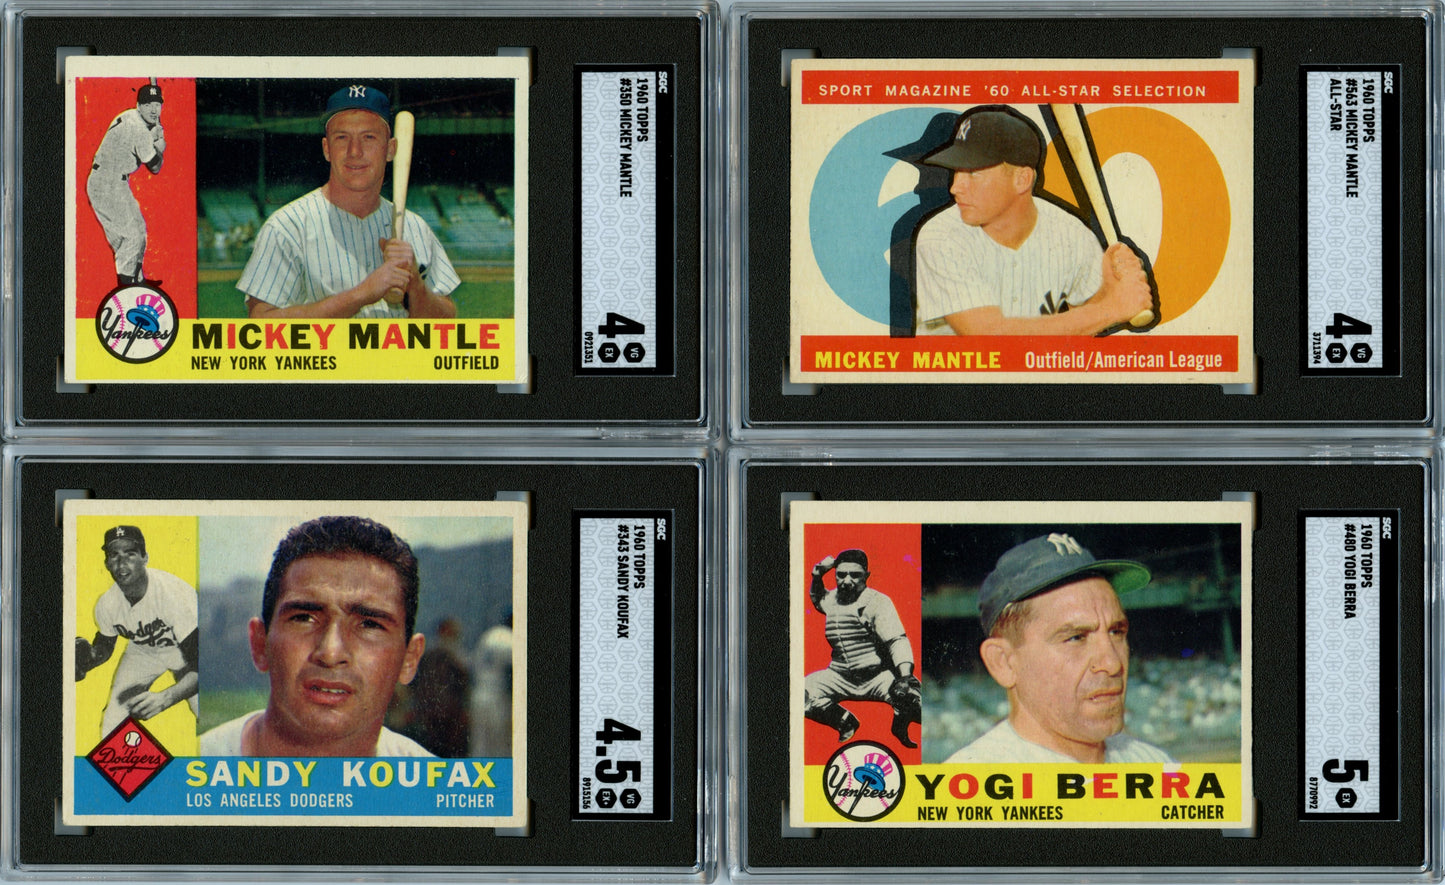 1960 Topps Baseball Complete Set Break 572 Spot Random Card (Mickey Mantle SGC 4, Mickey Mantle All-Star SGC 4, Sandy Koufax SGC 4.5, Yogi Berra SGC 5, etc.!)